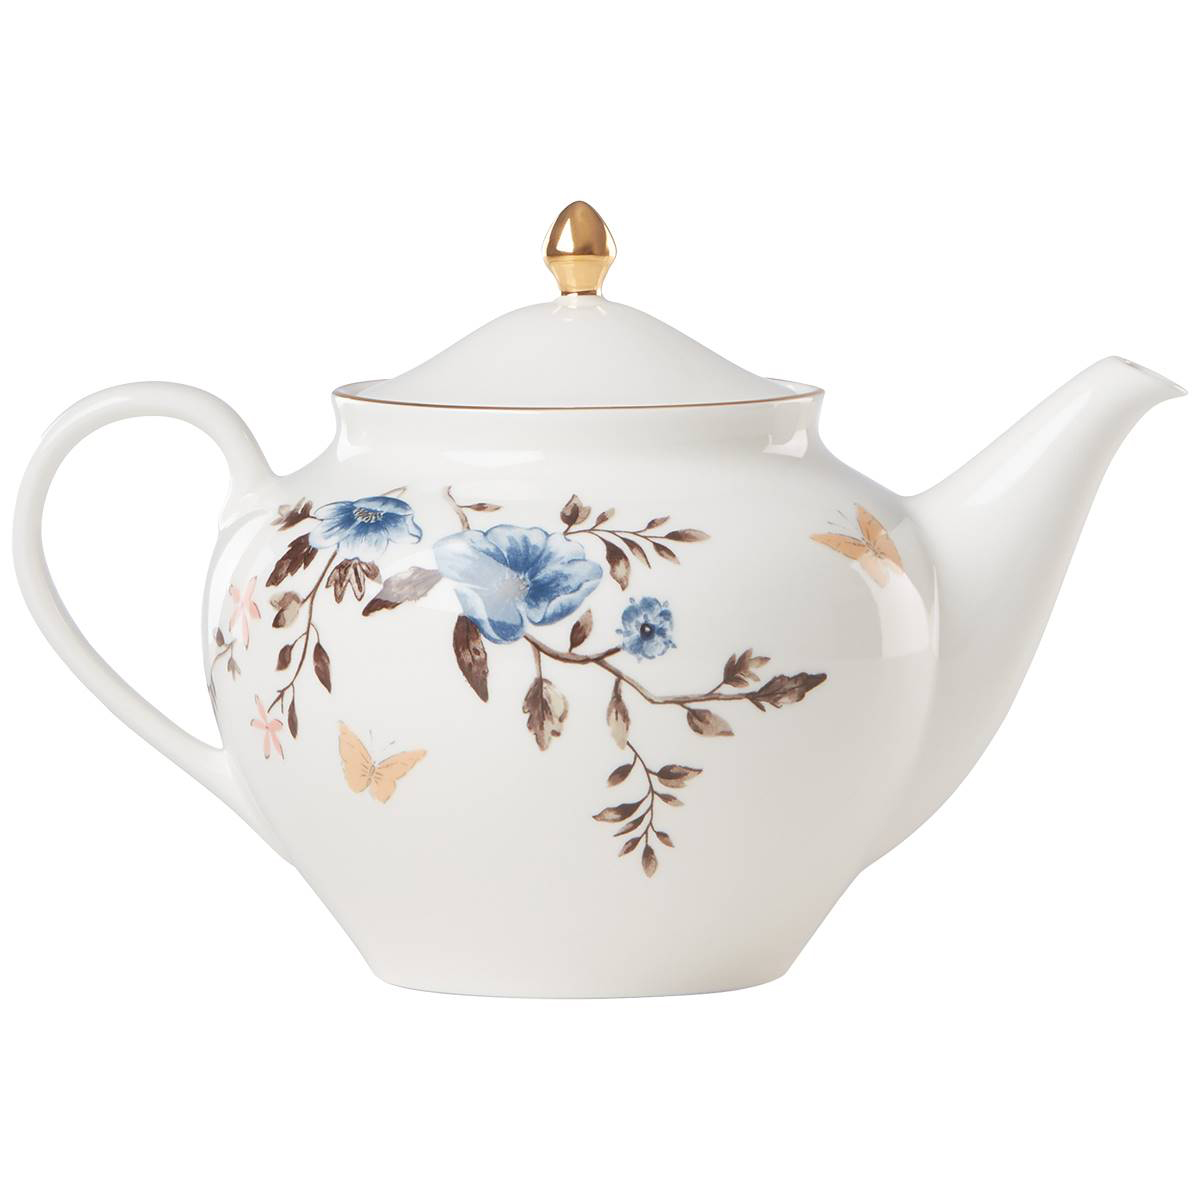 Lenox(R) Sprig & Vine(tm) Floral Teapot